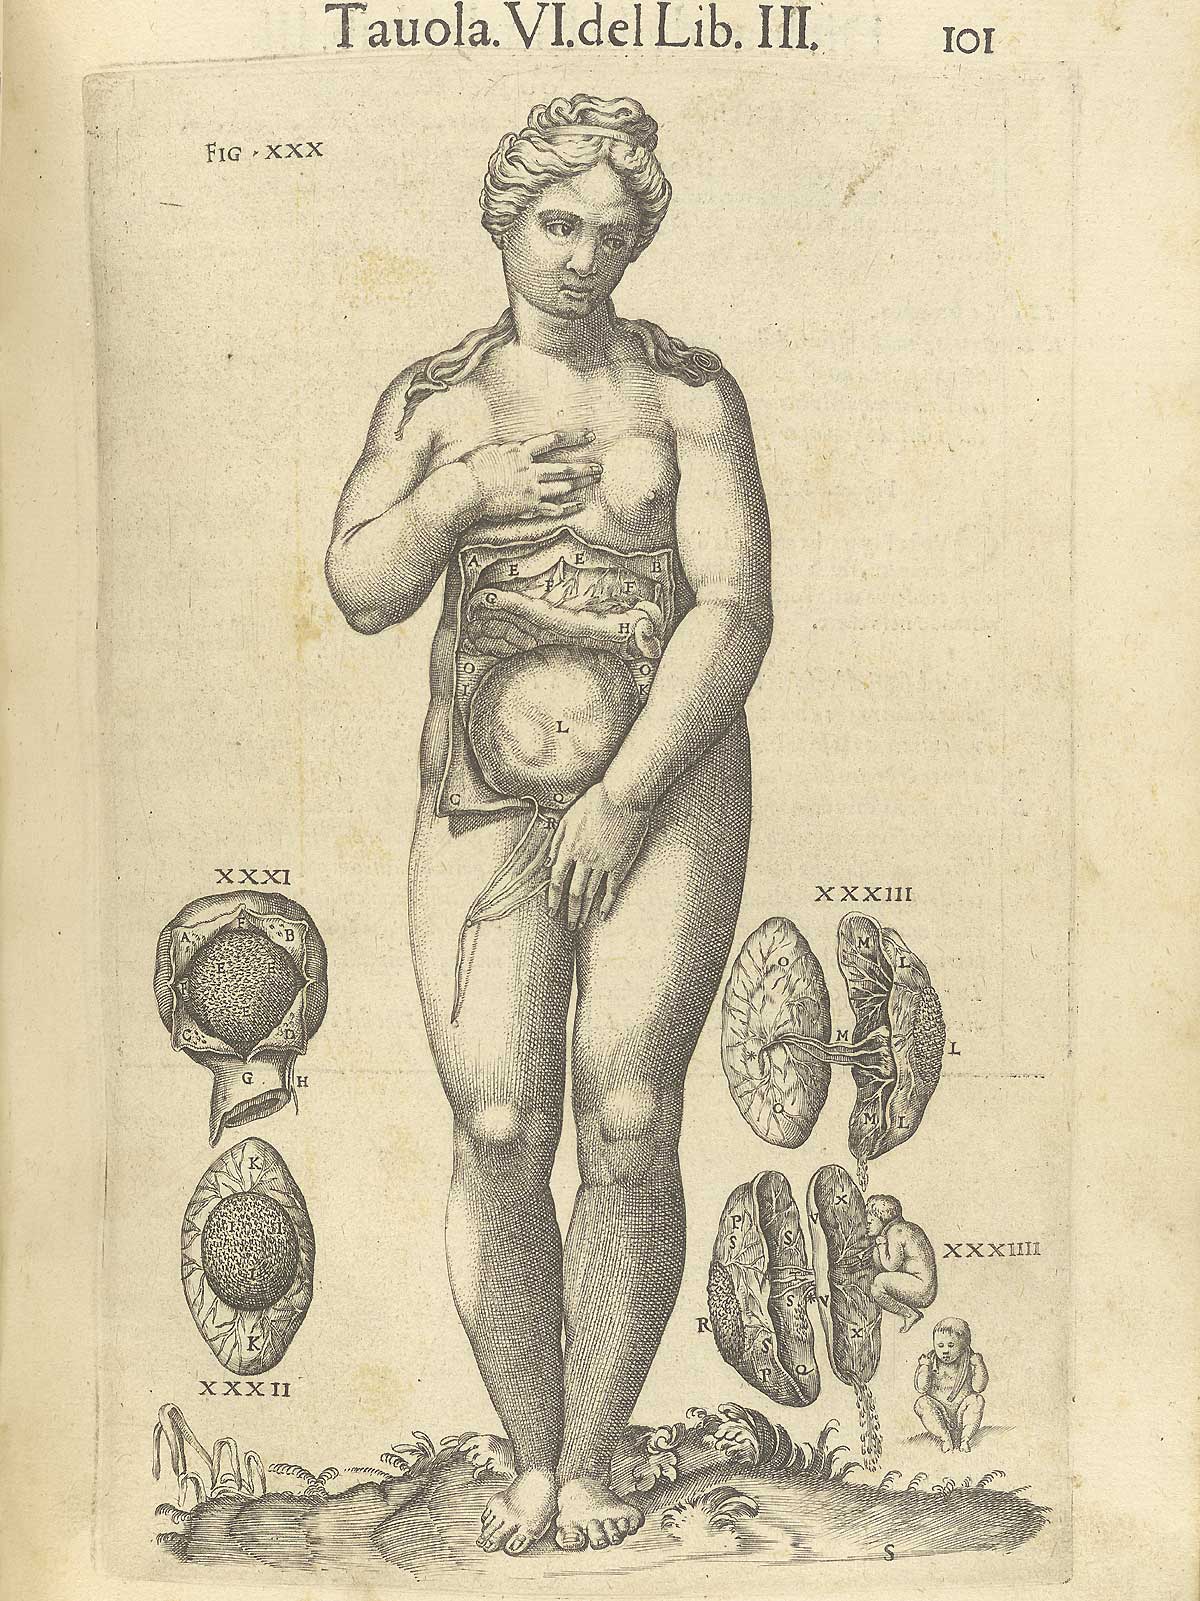 Page 101 of Juan Valverde de Amusco's Anatomia del corpo humano, featuring a female cadaver and her reproductive organs.